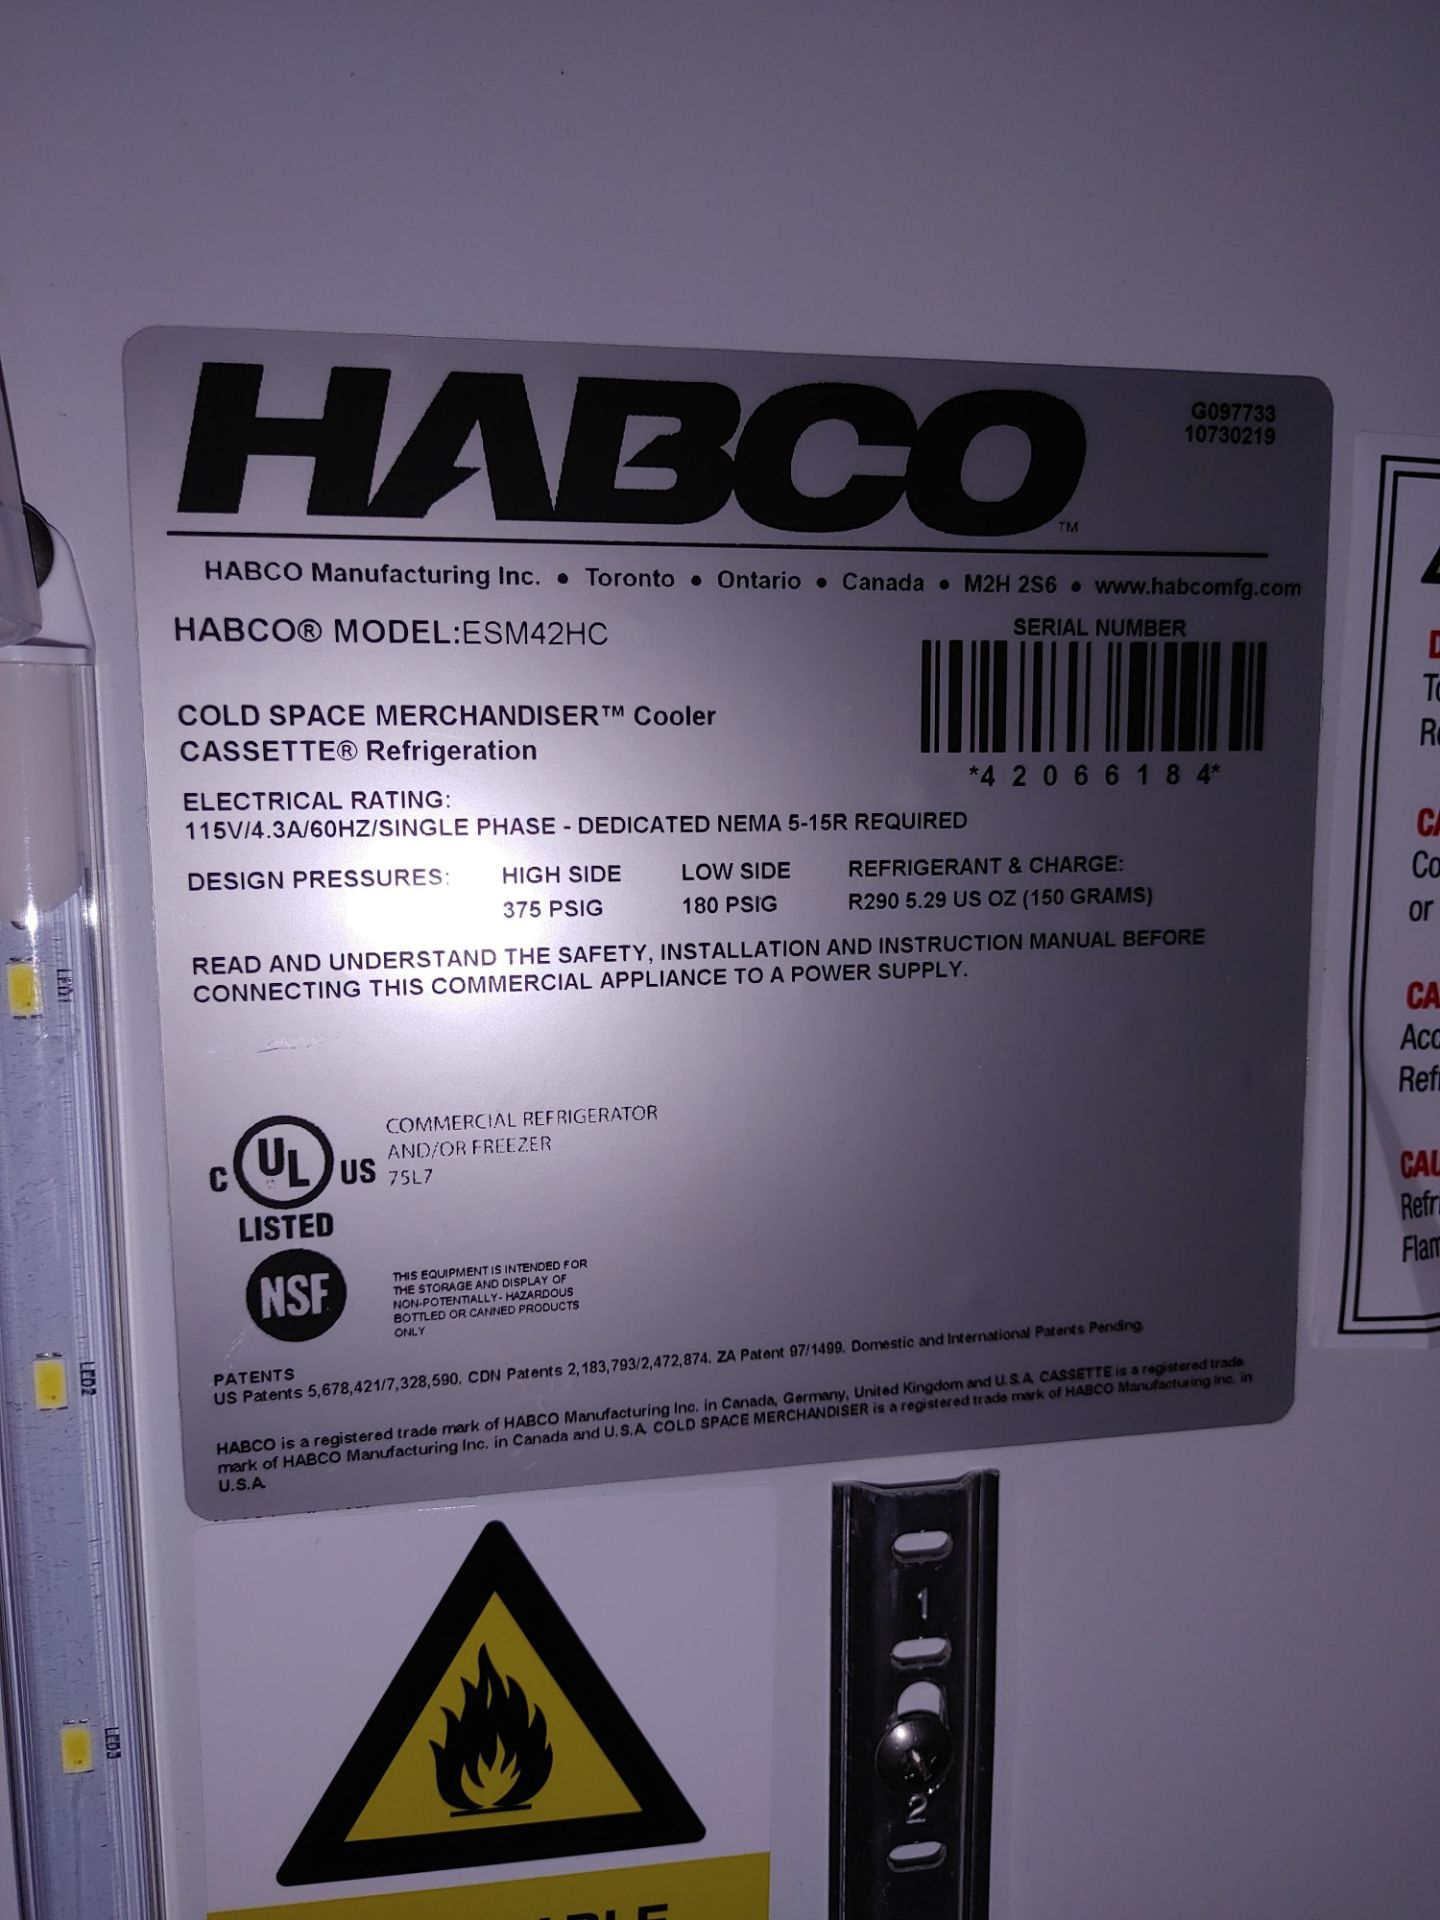 Habco "ESM42HC" 2 Door Glass Front Refrigerator S/N 42066184 - Image 2 of 2